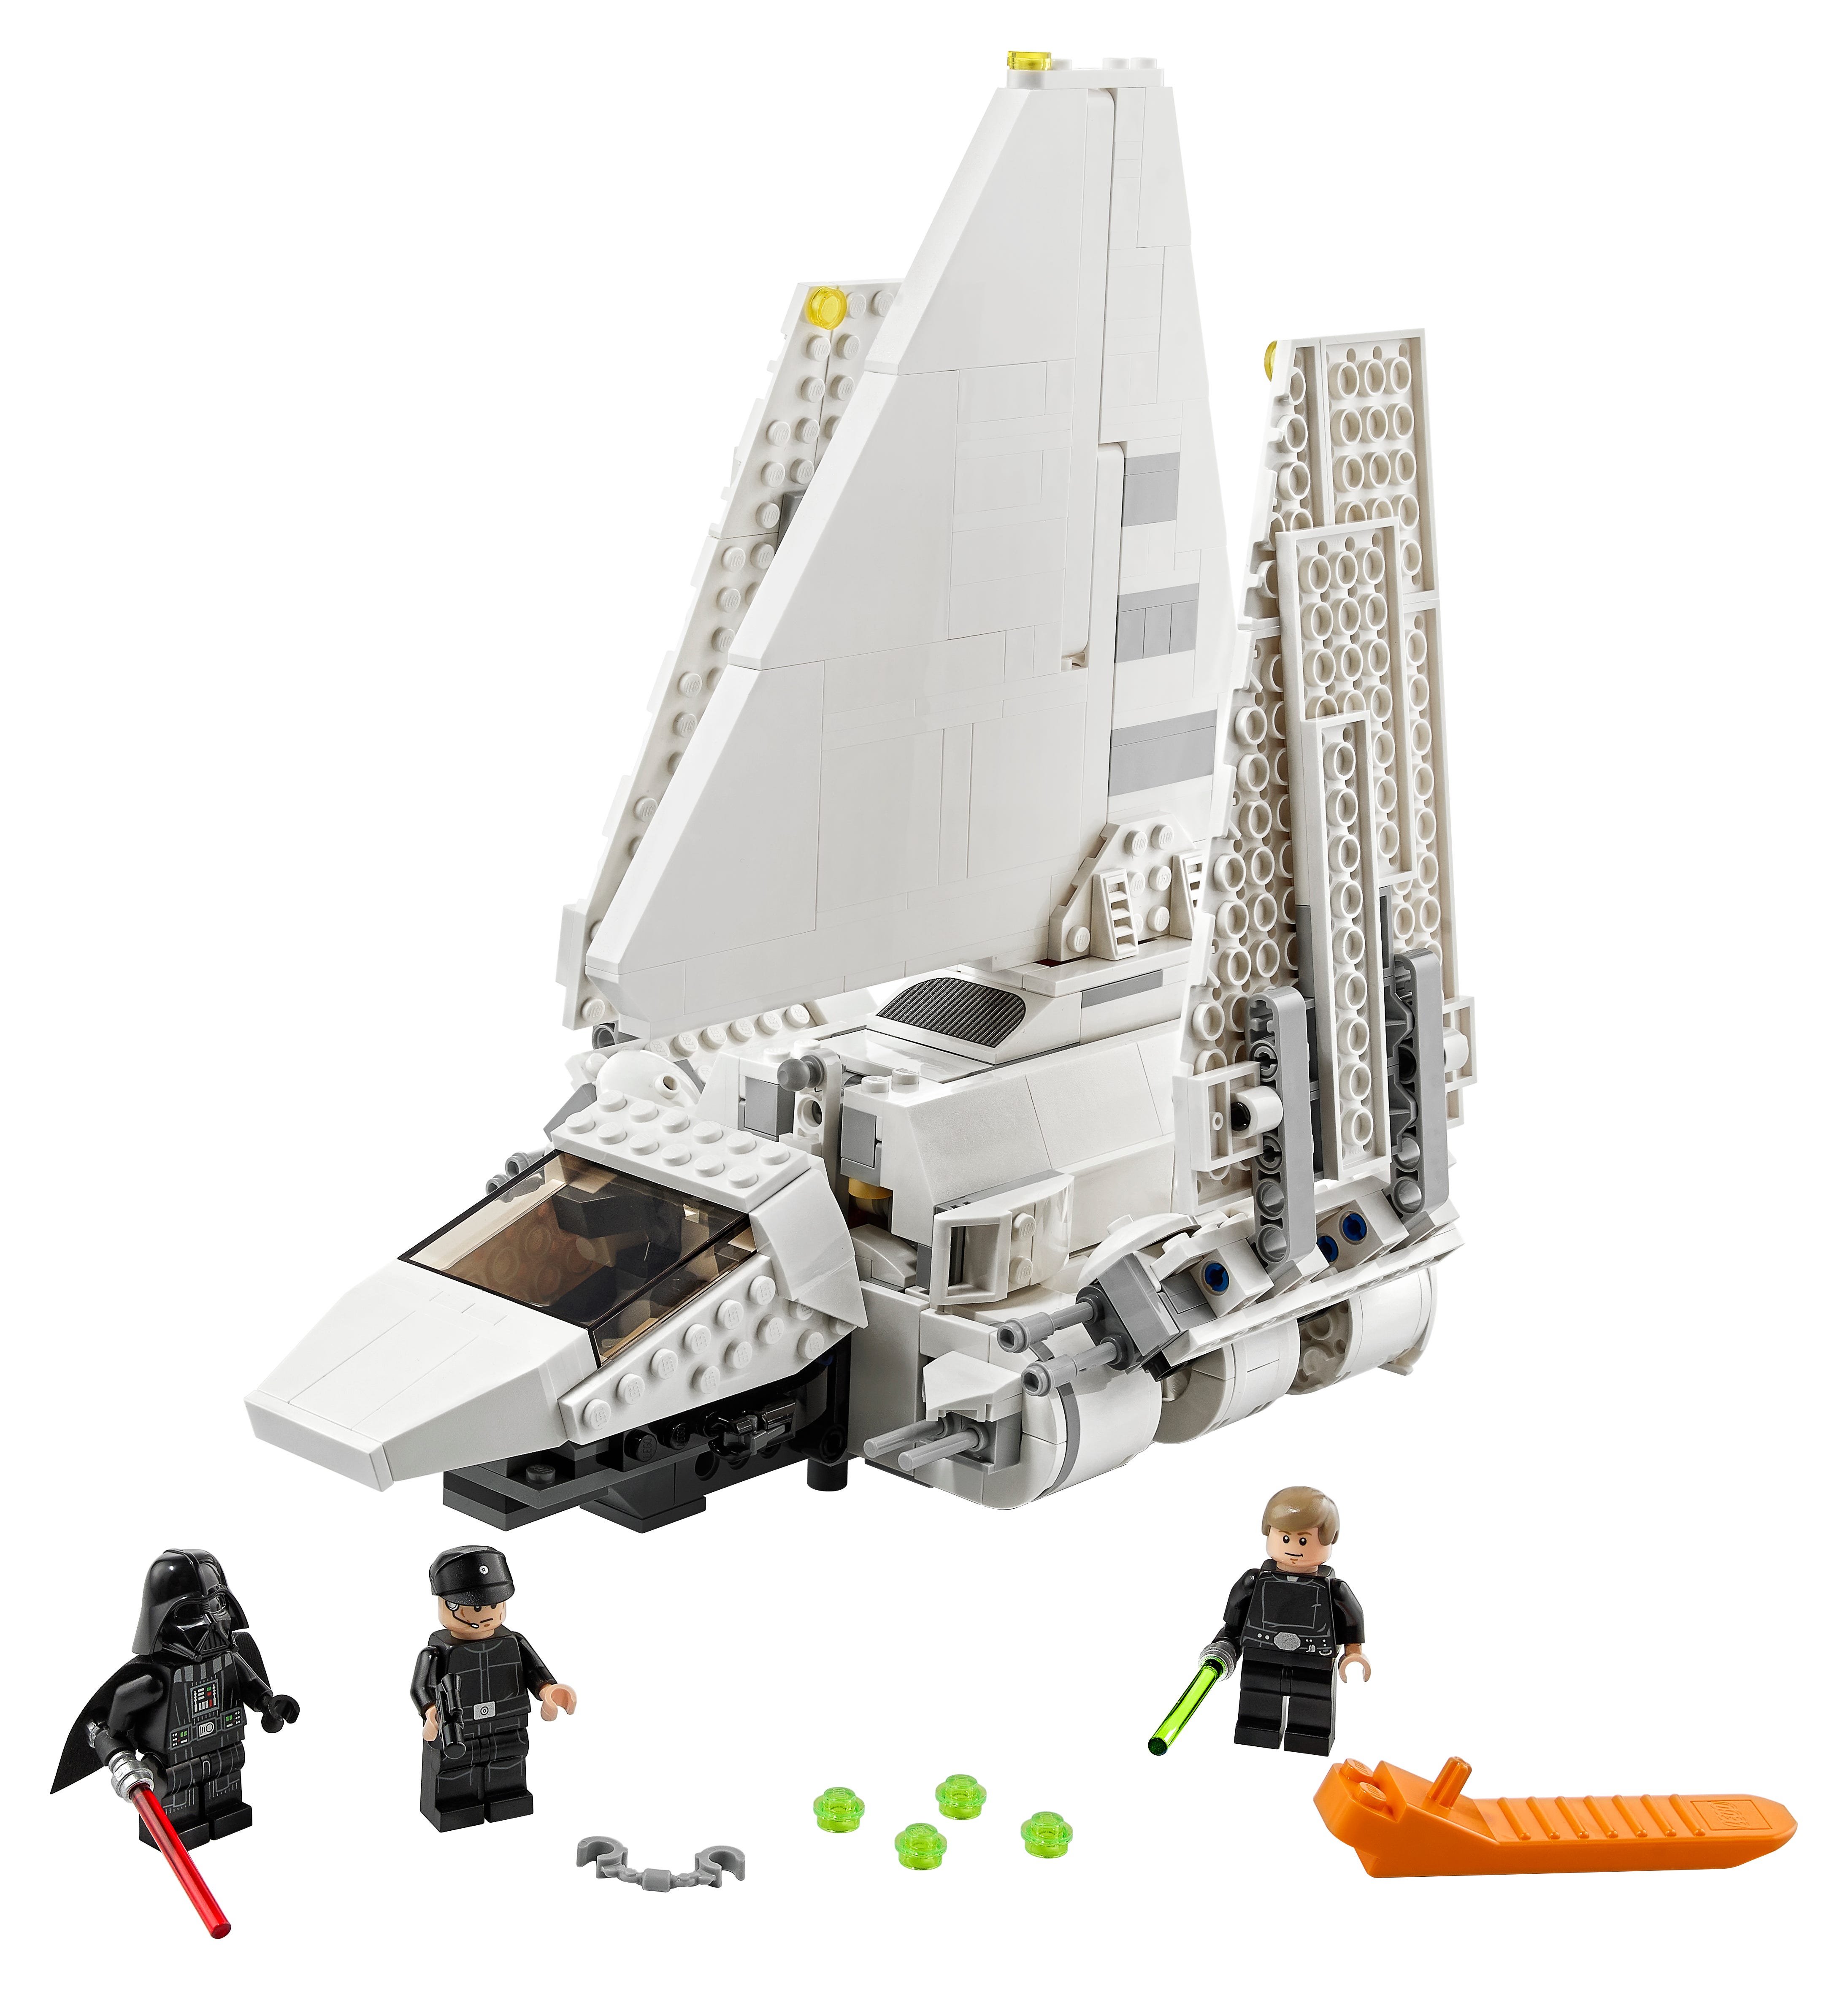 Imperial Shuttle"